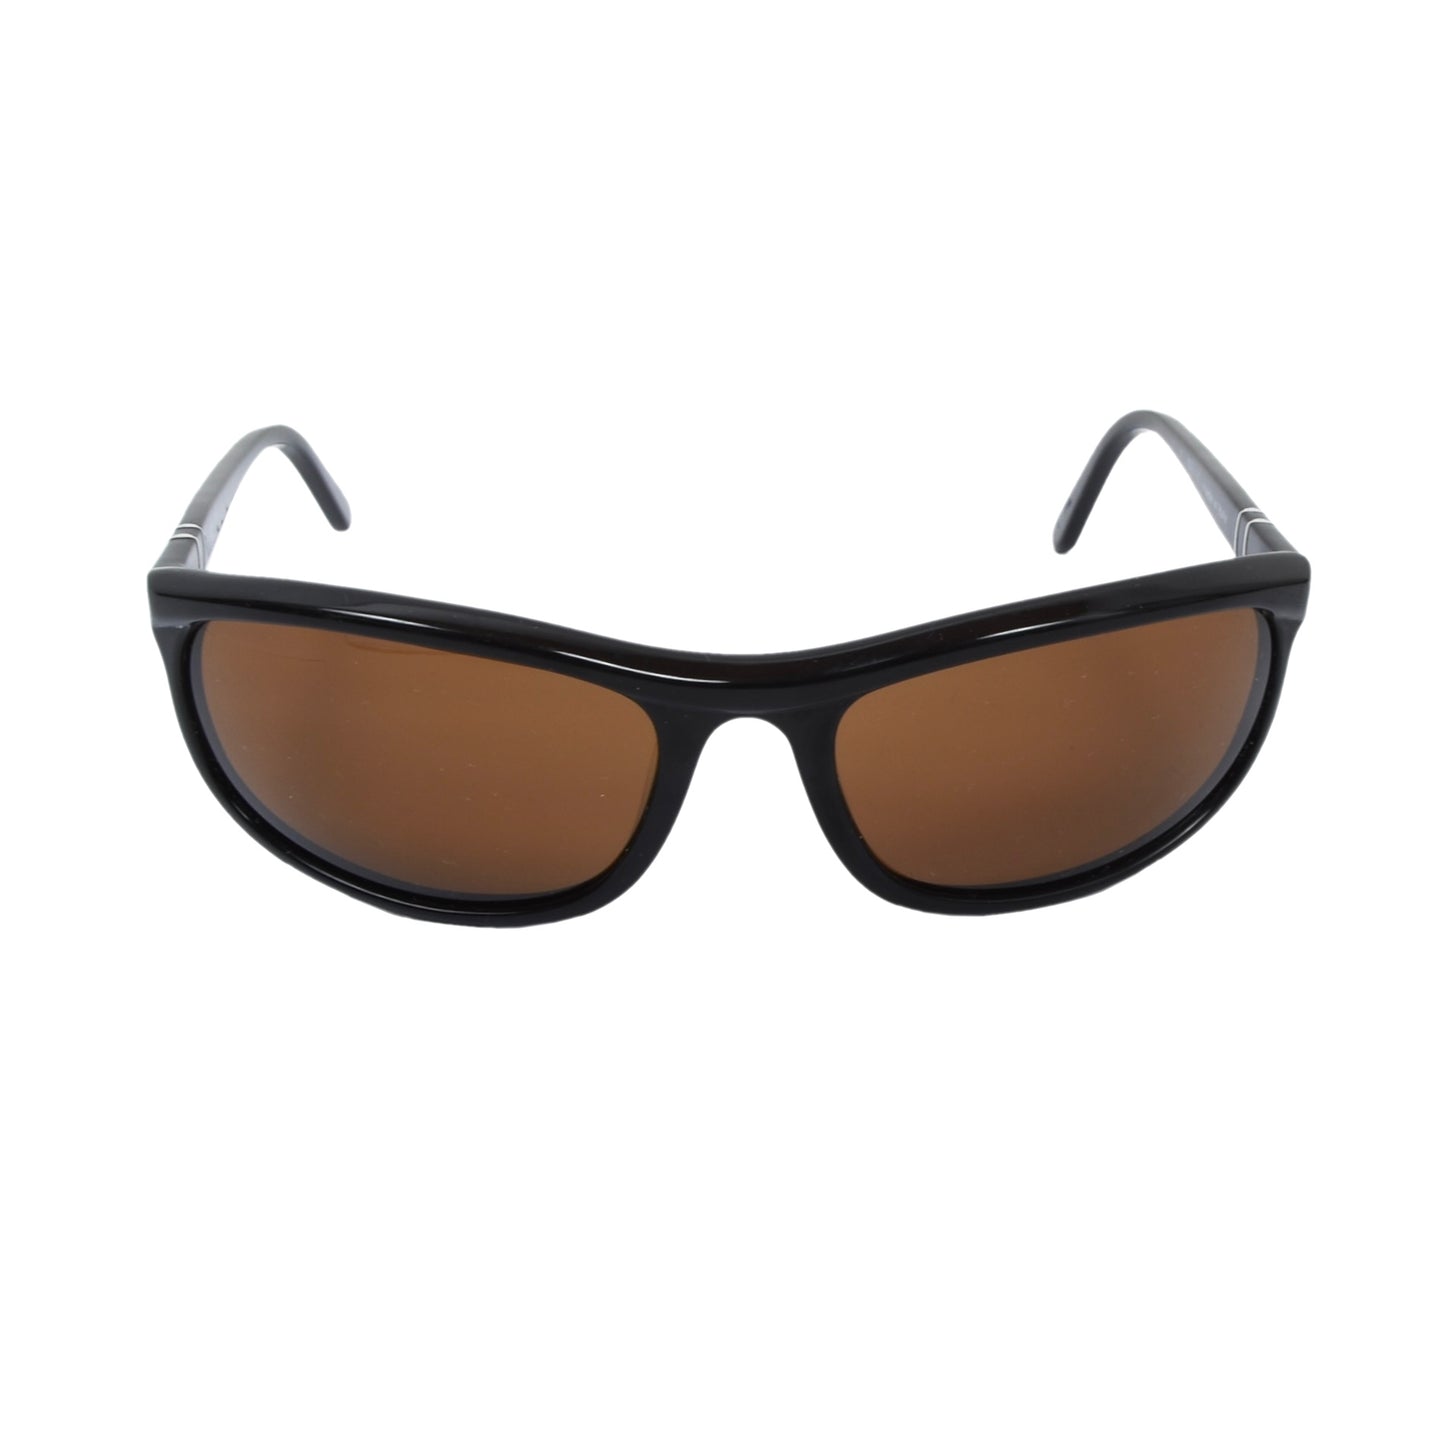 Persol Mod. 58230 Terminator Sunglasses - Black